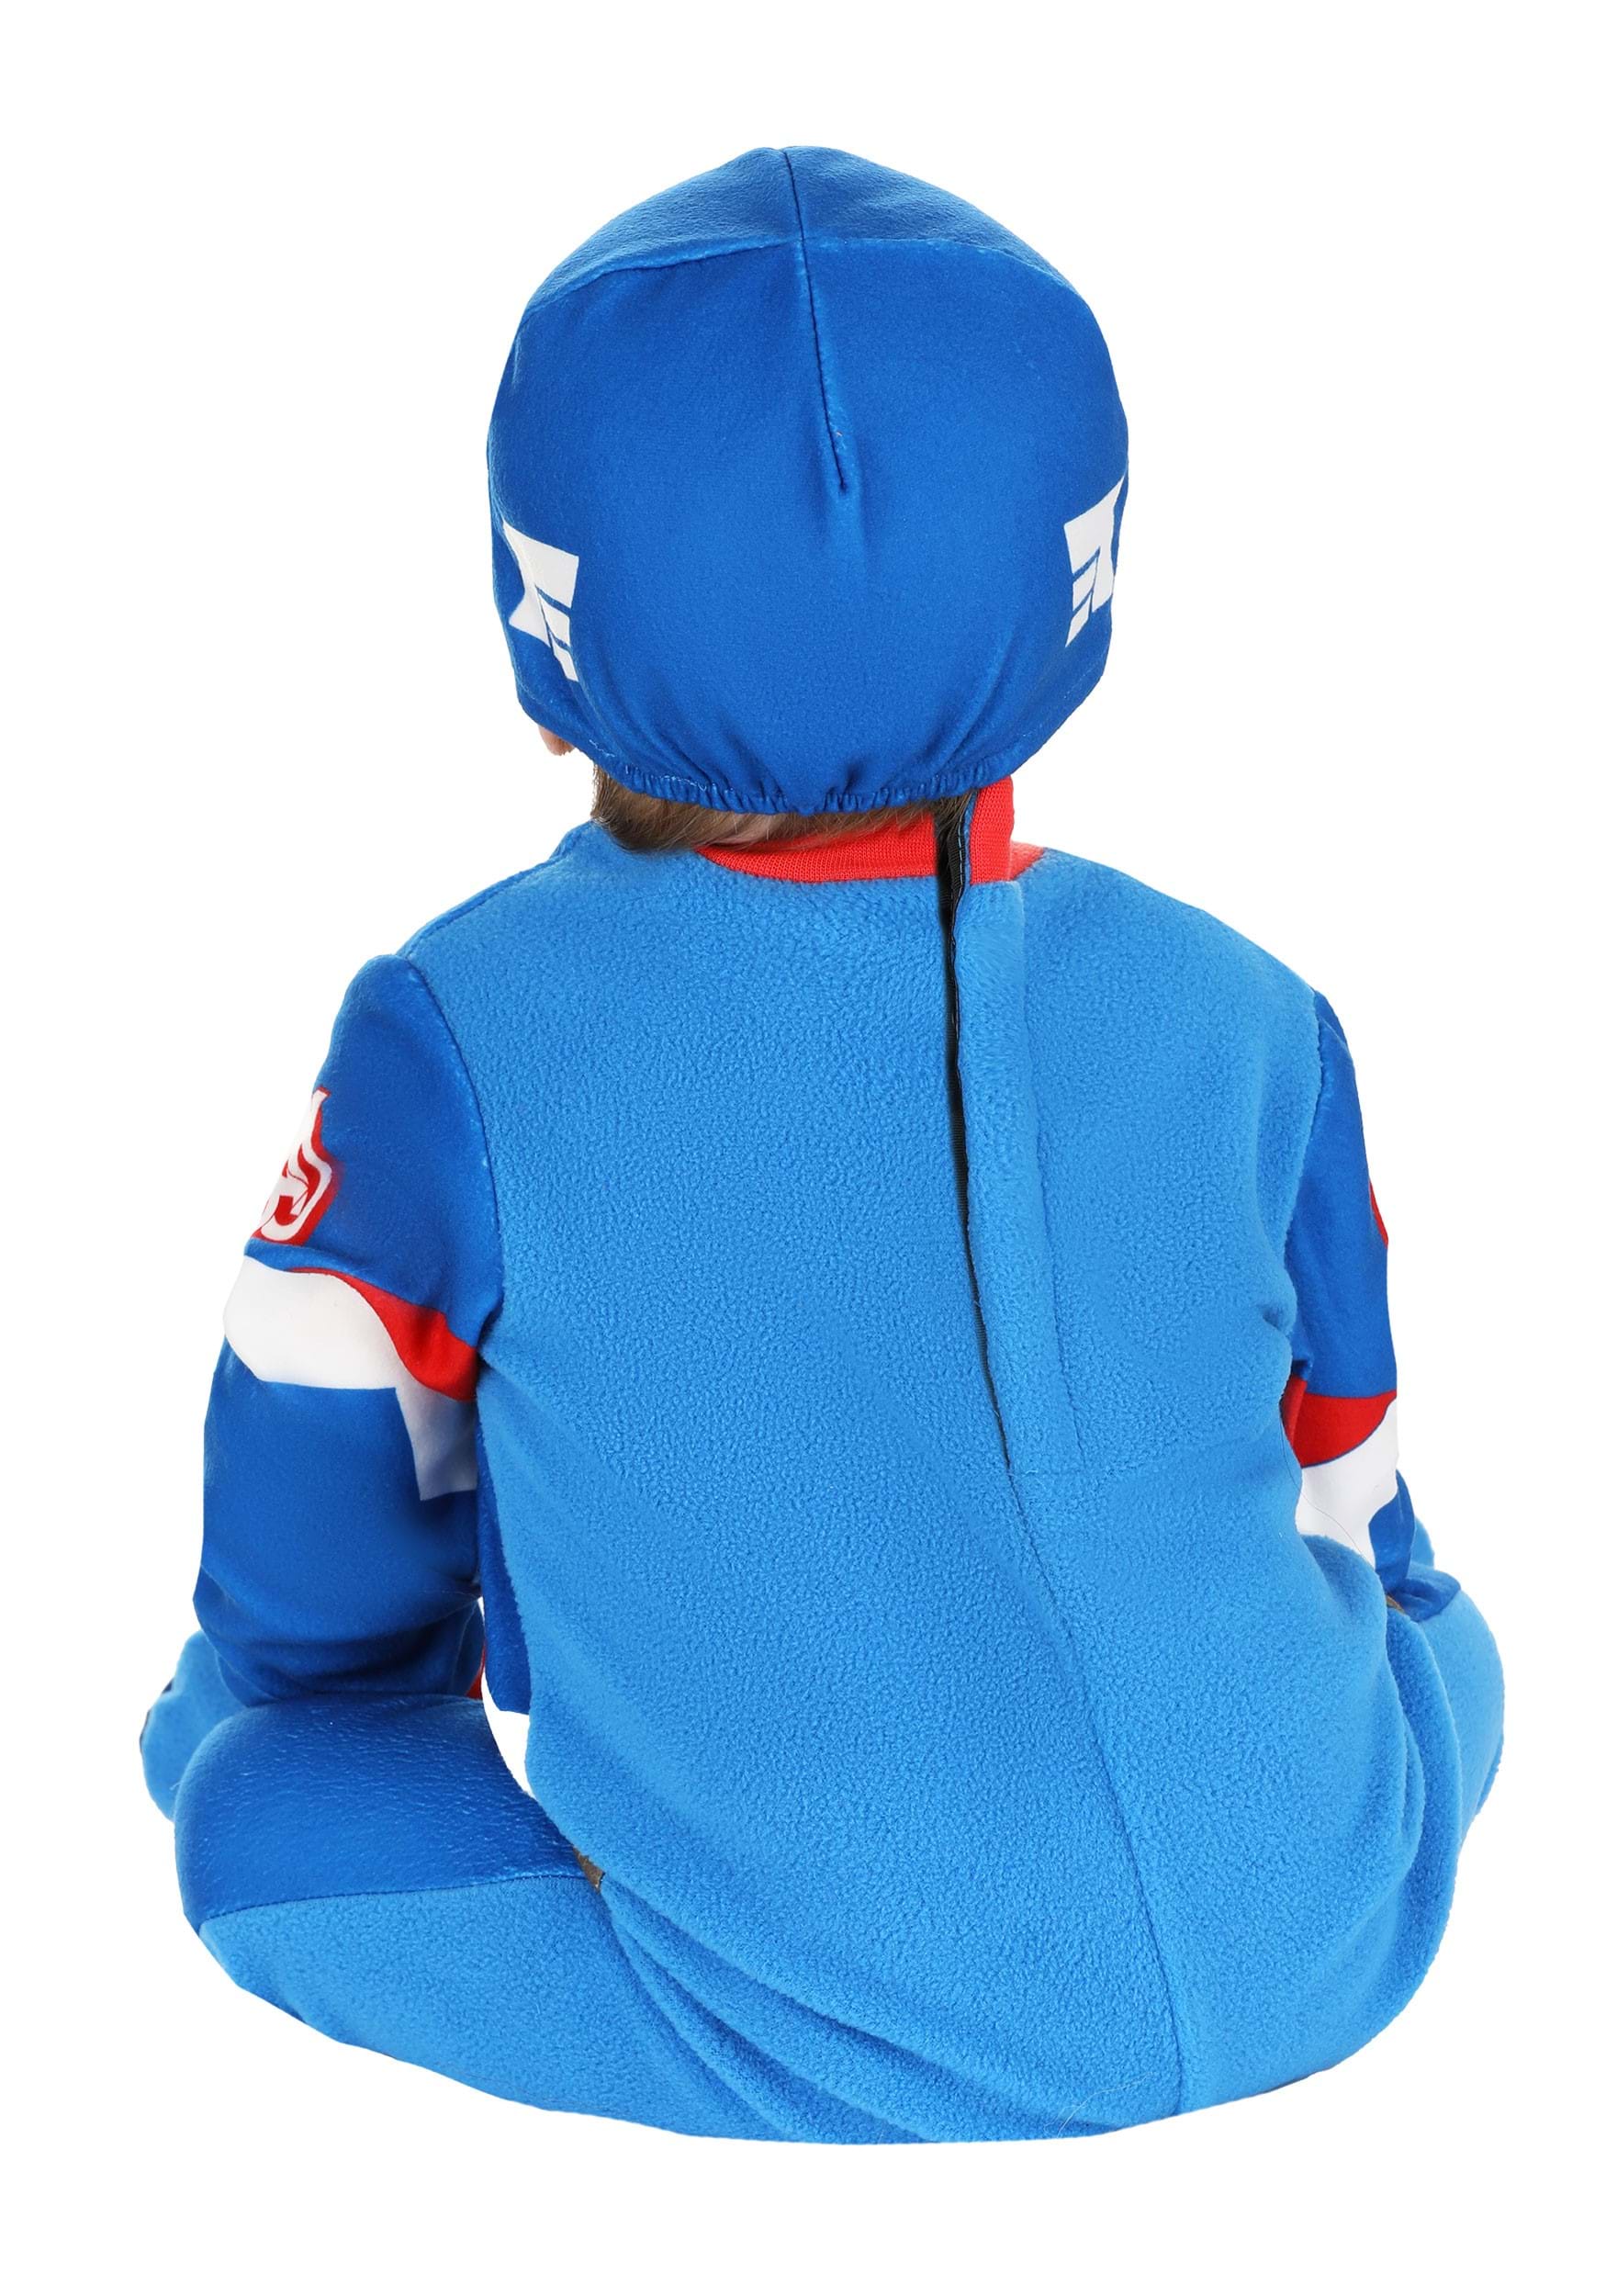 Captain America Steve Rogers Baby Costume